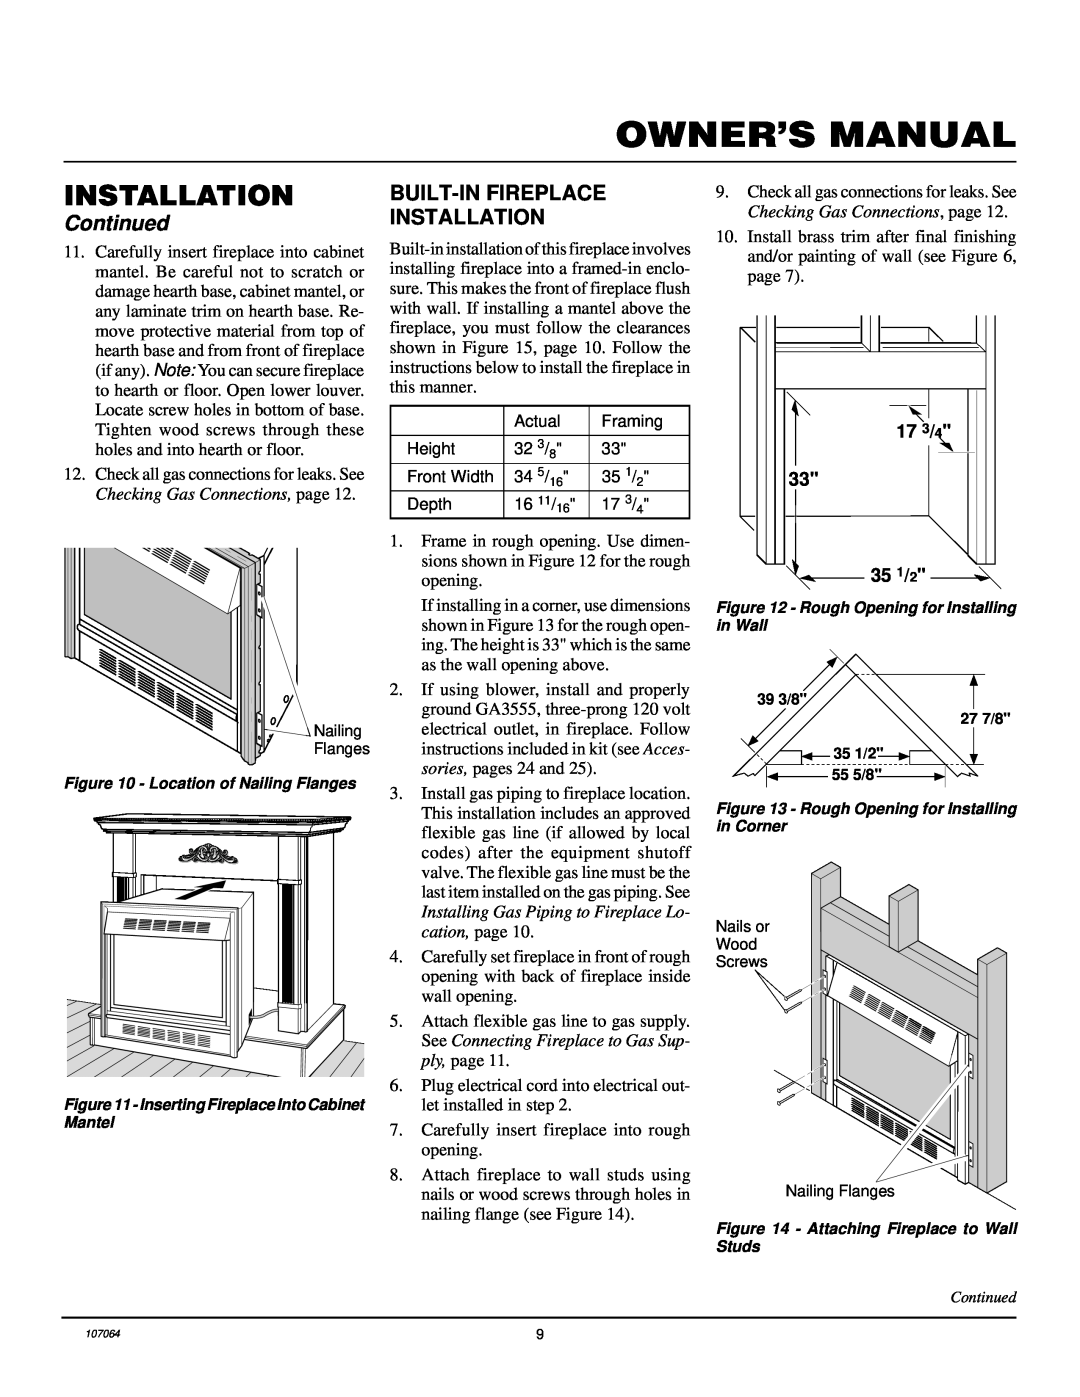 Desa LFP33PRA installation manual Built-Infireplace Installation, 17 3/4 33 35 1/2, Continued 